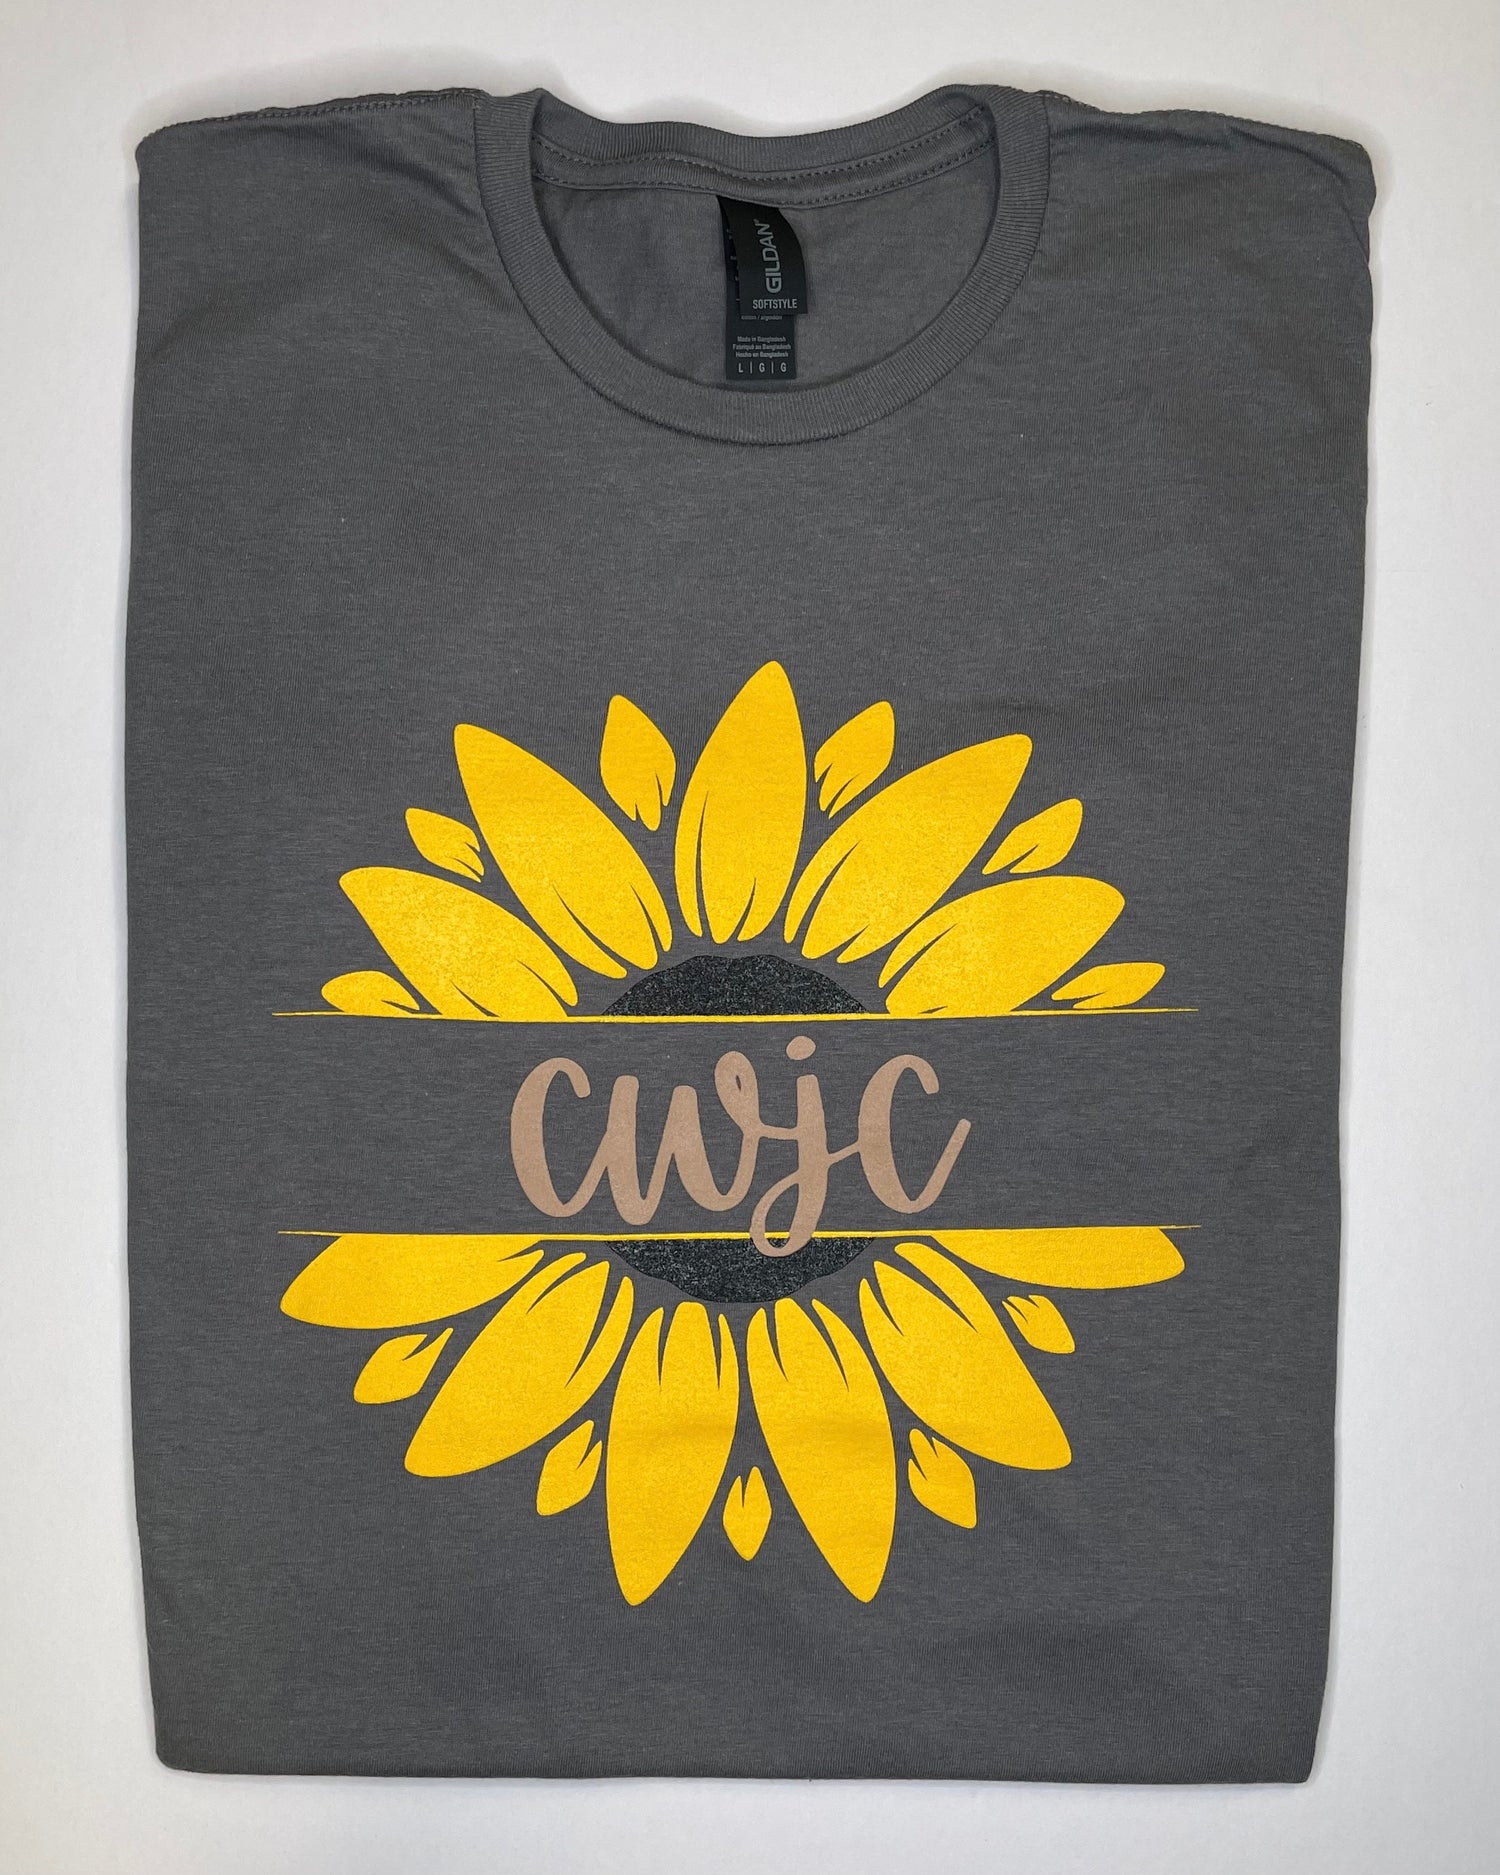 CWJC Waco Sunflowers tee closeup